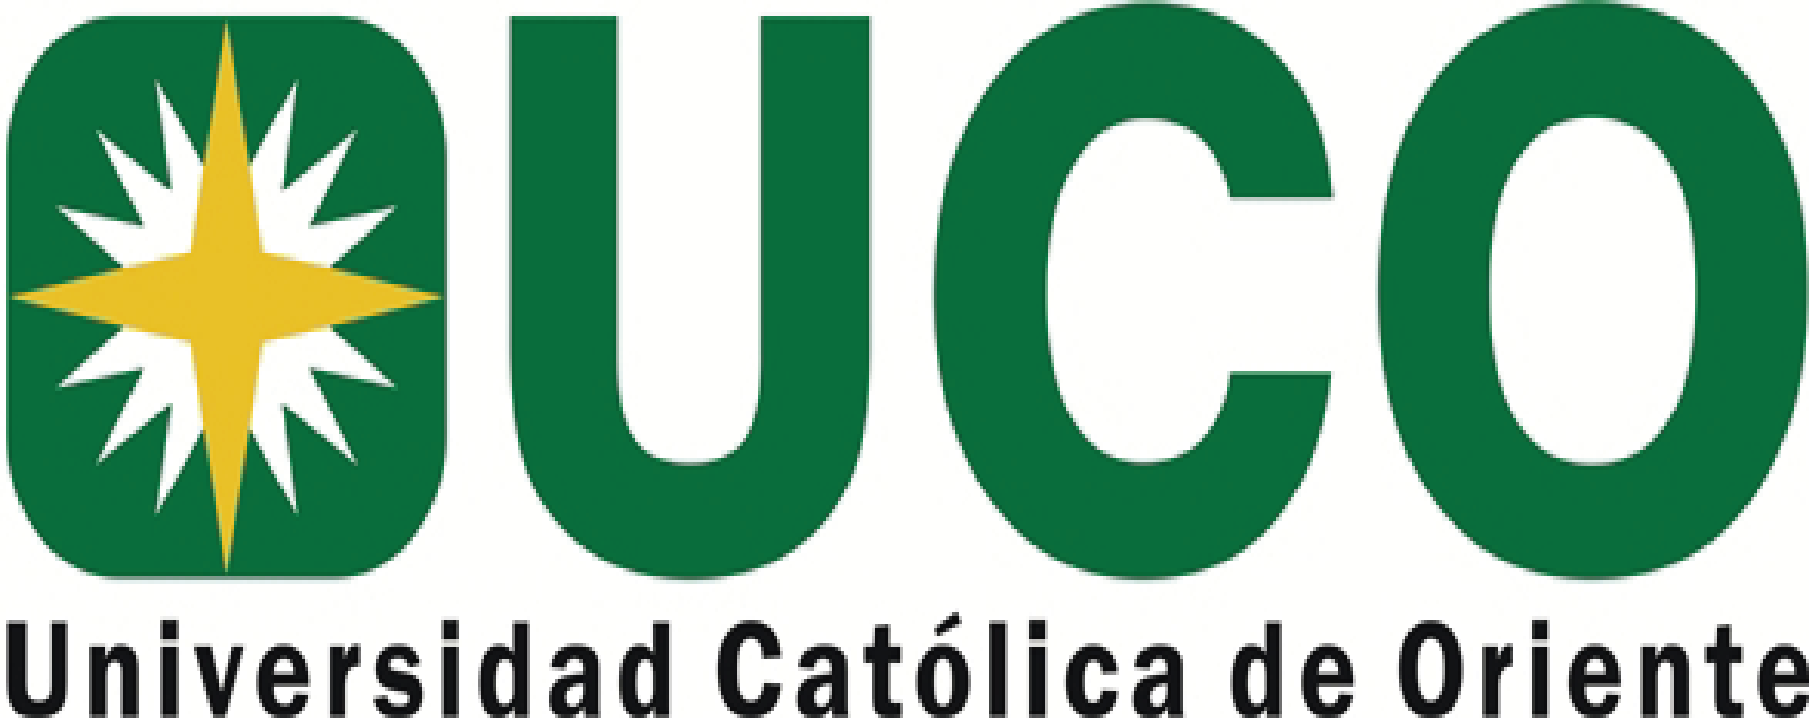 UCO - Universidad Católica de Oriente